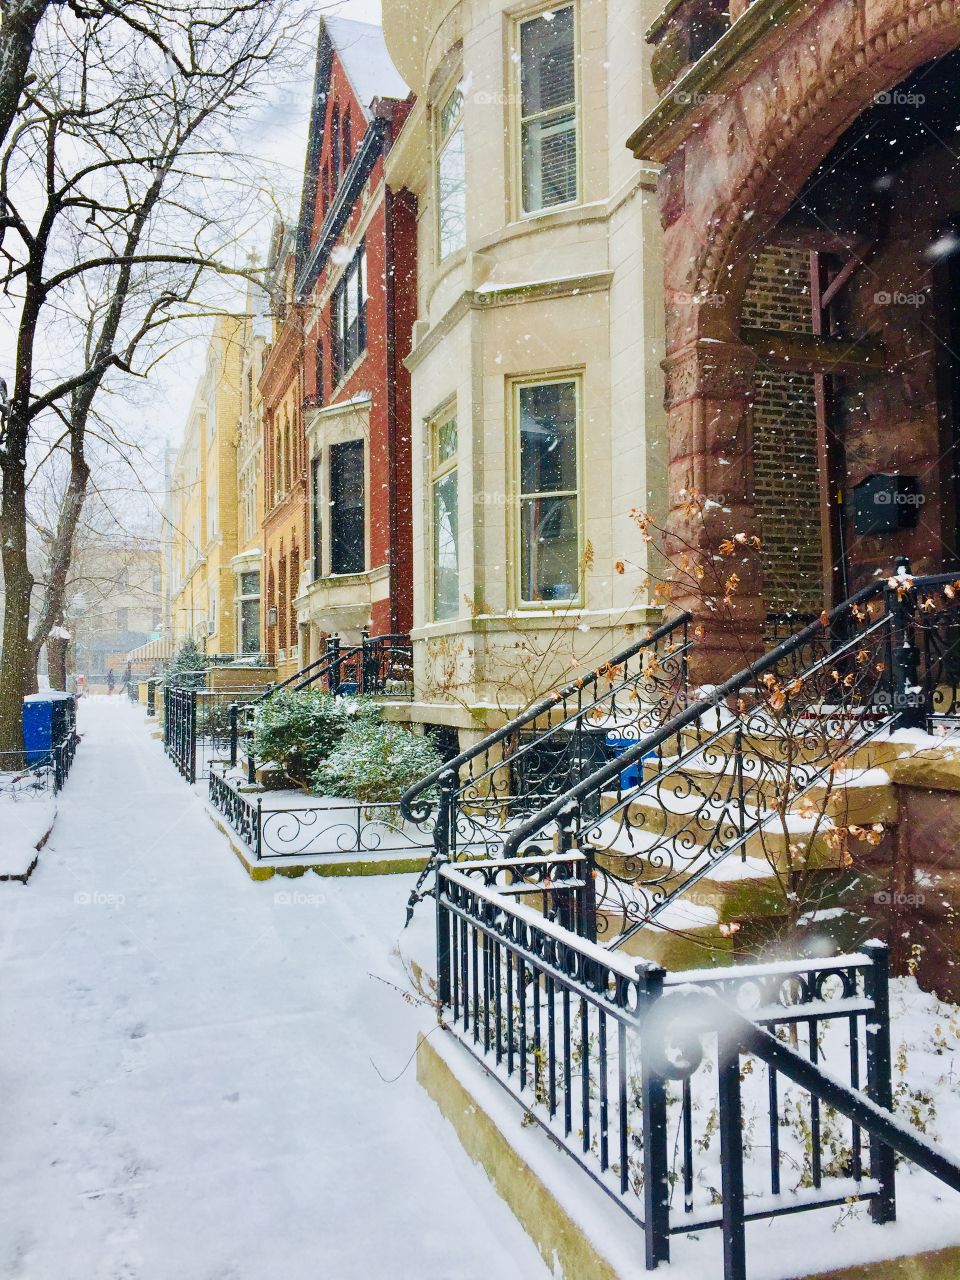 A winter wonderland walk through the streets of Chicago.